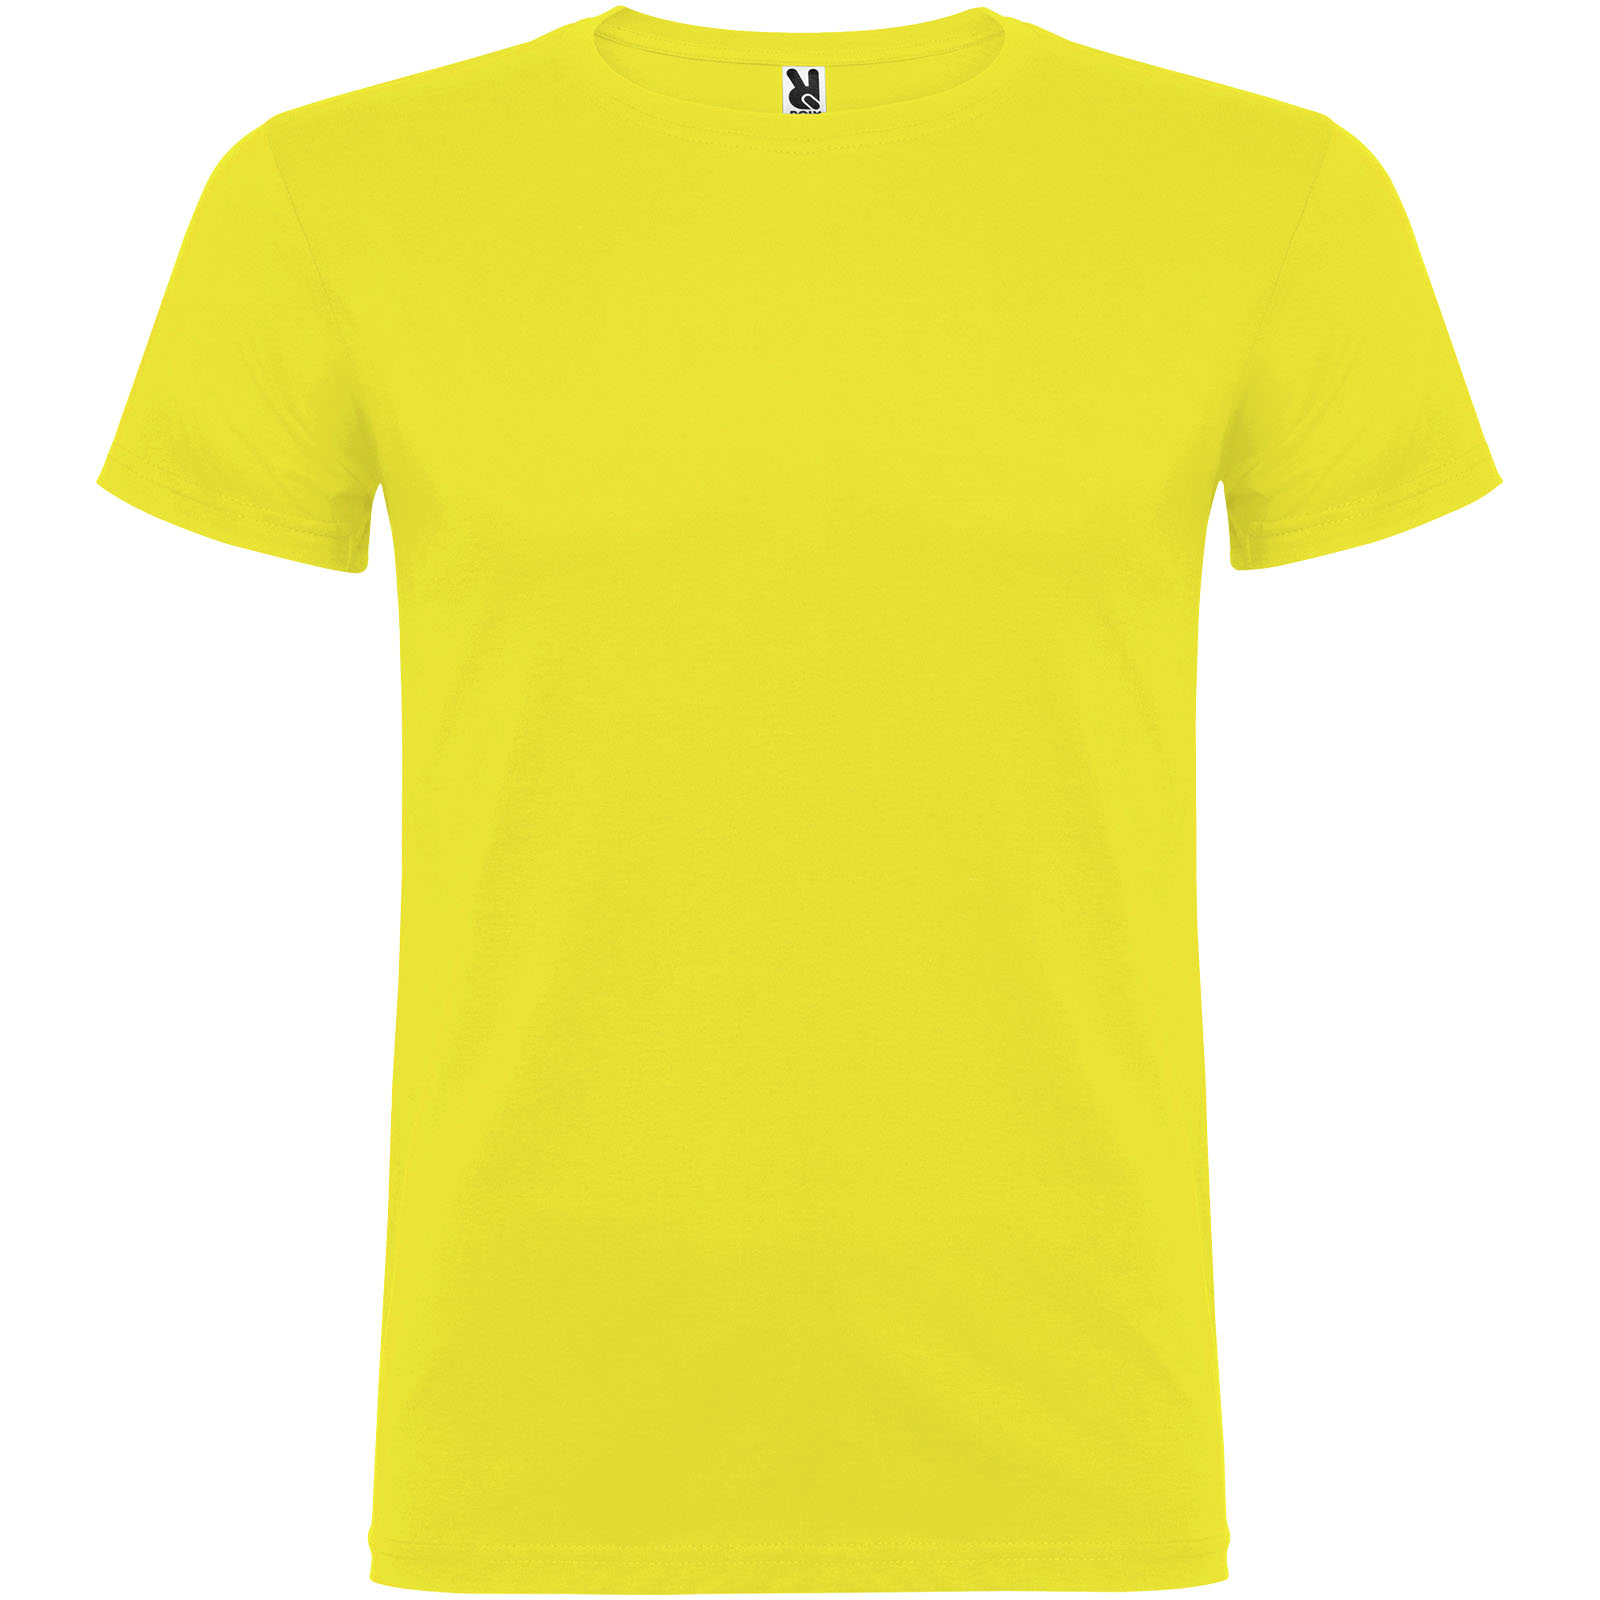 Advertising T-shirts - Beagle short sleeve men's t-shirt